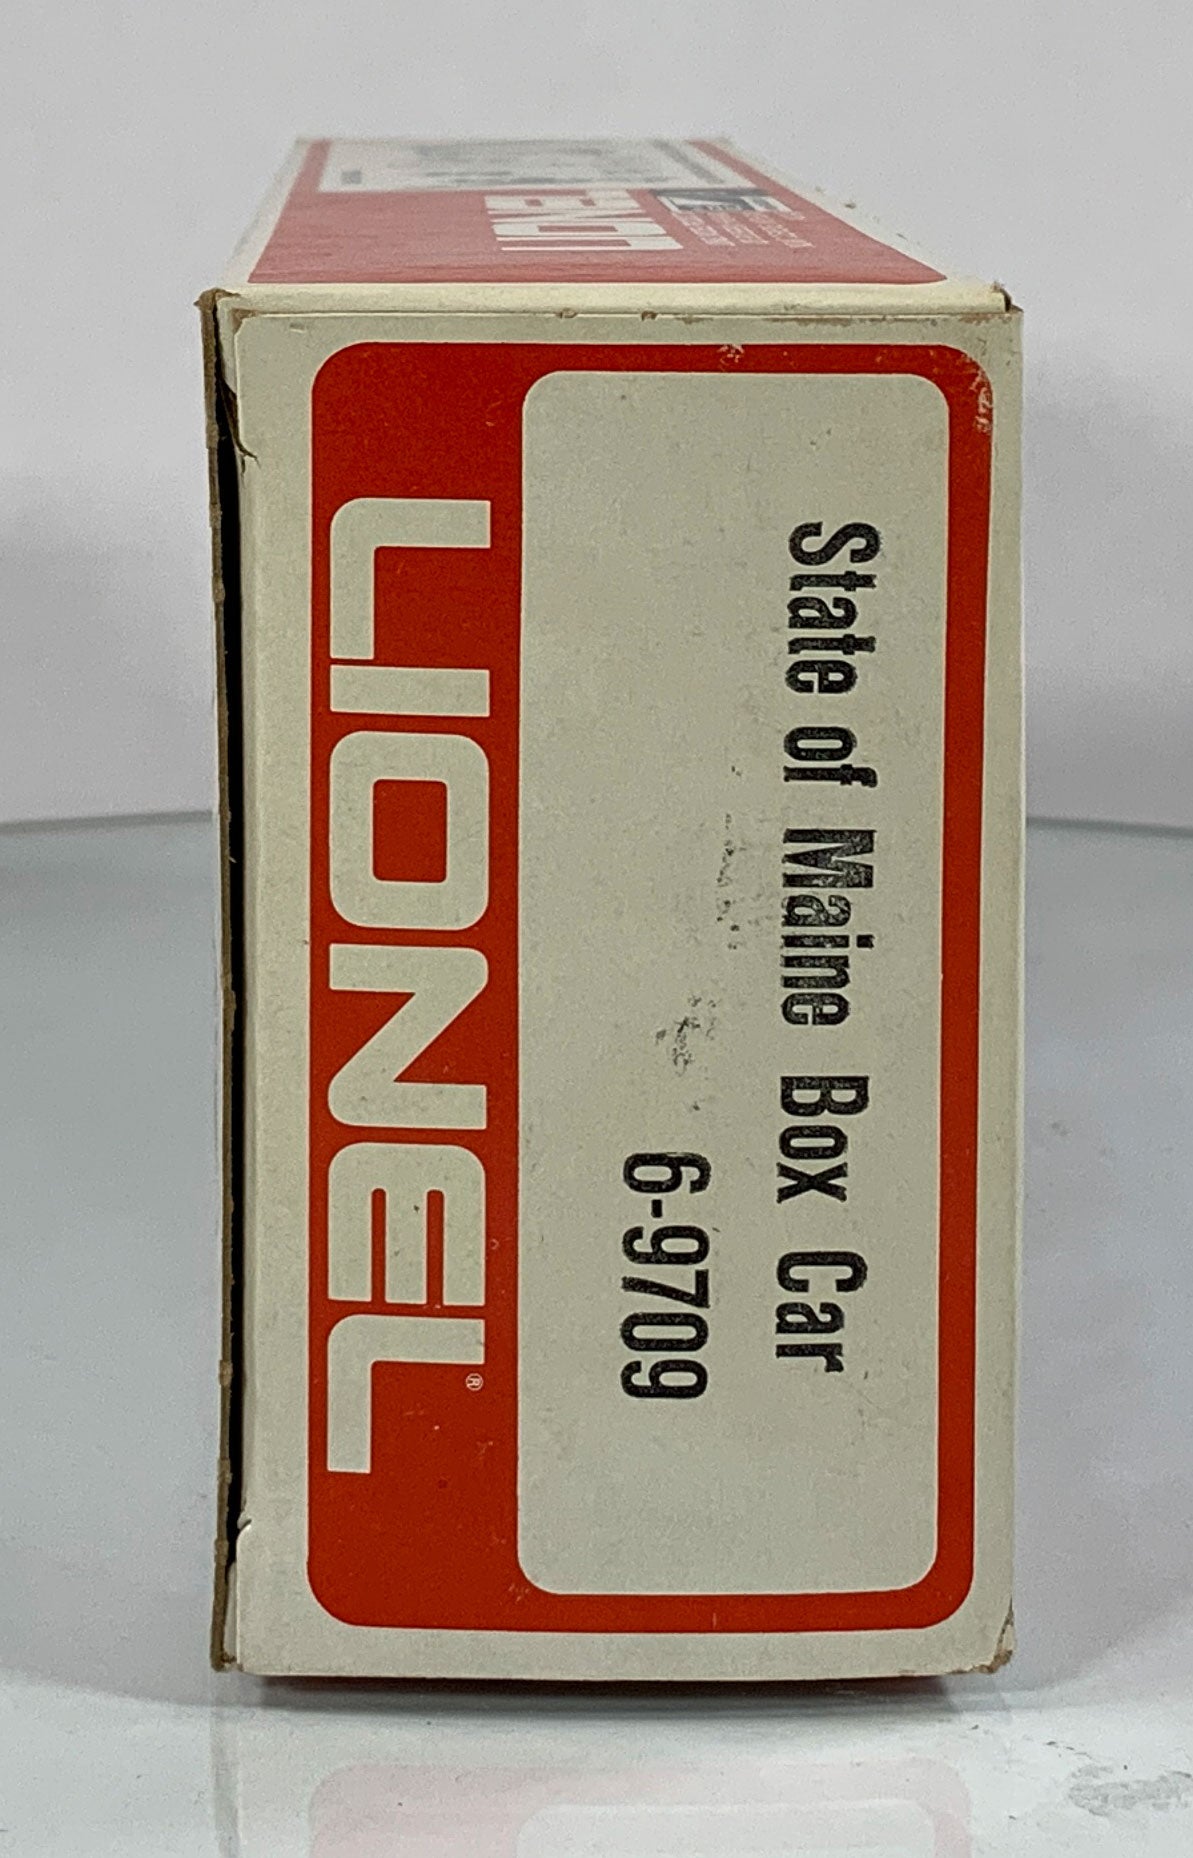 LIONEL • O GAUGE • 1972 State of Maine Bangor and Aroostook Boxcar 6-9709 • EX COND hi